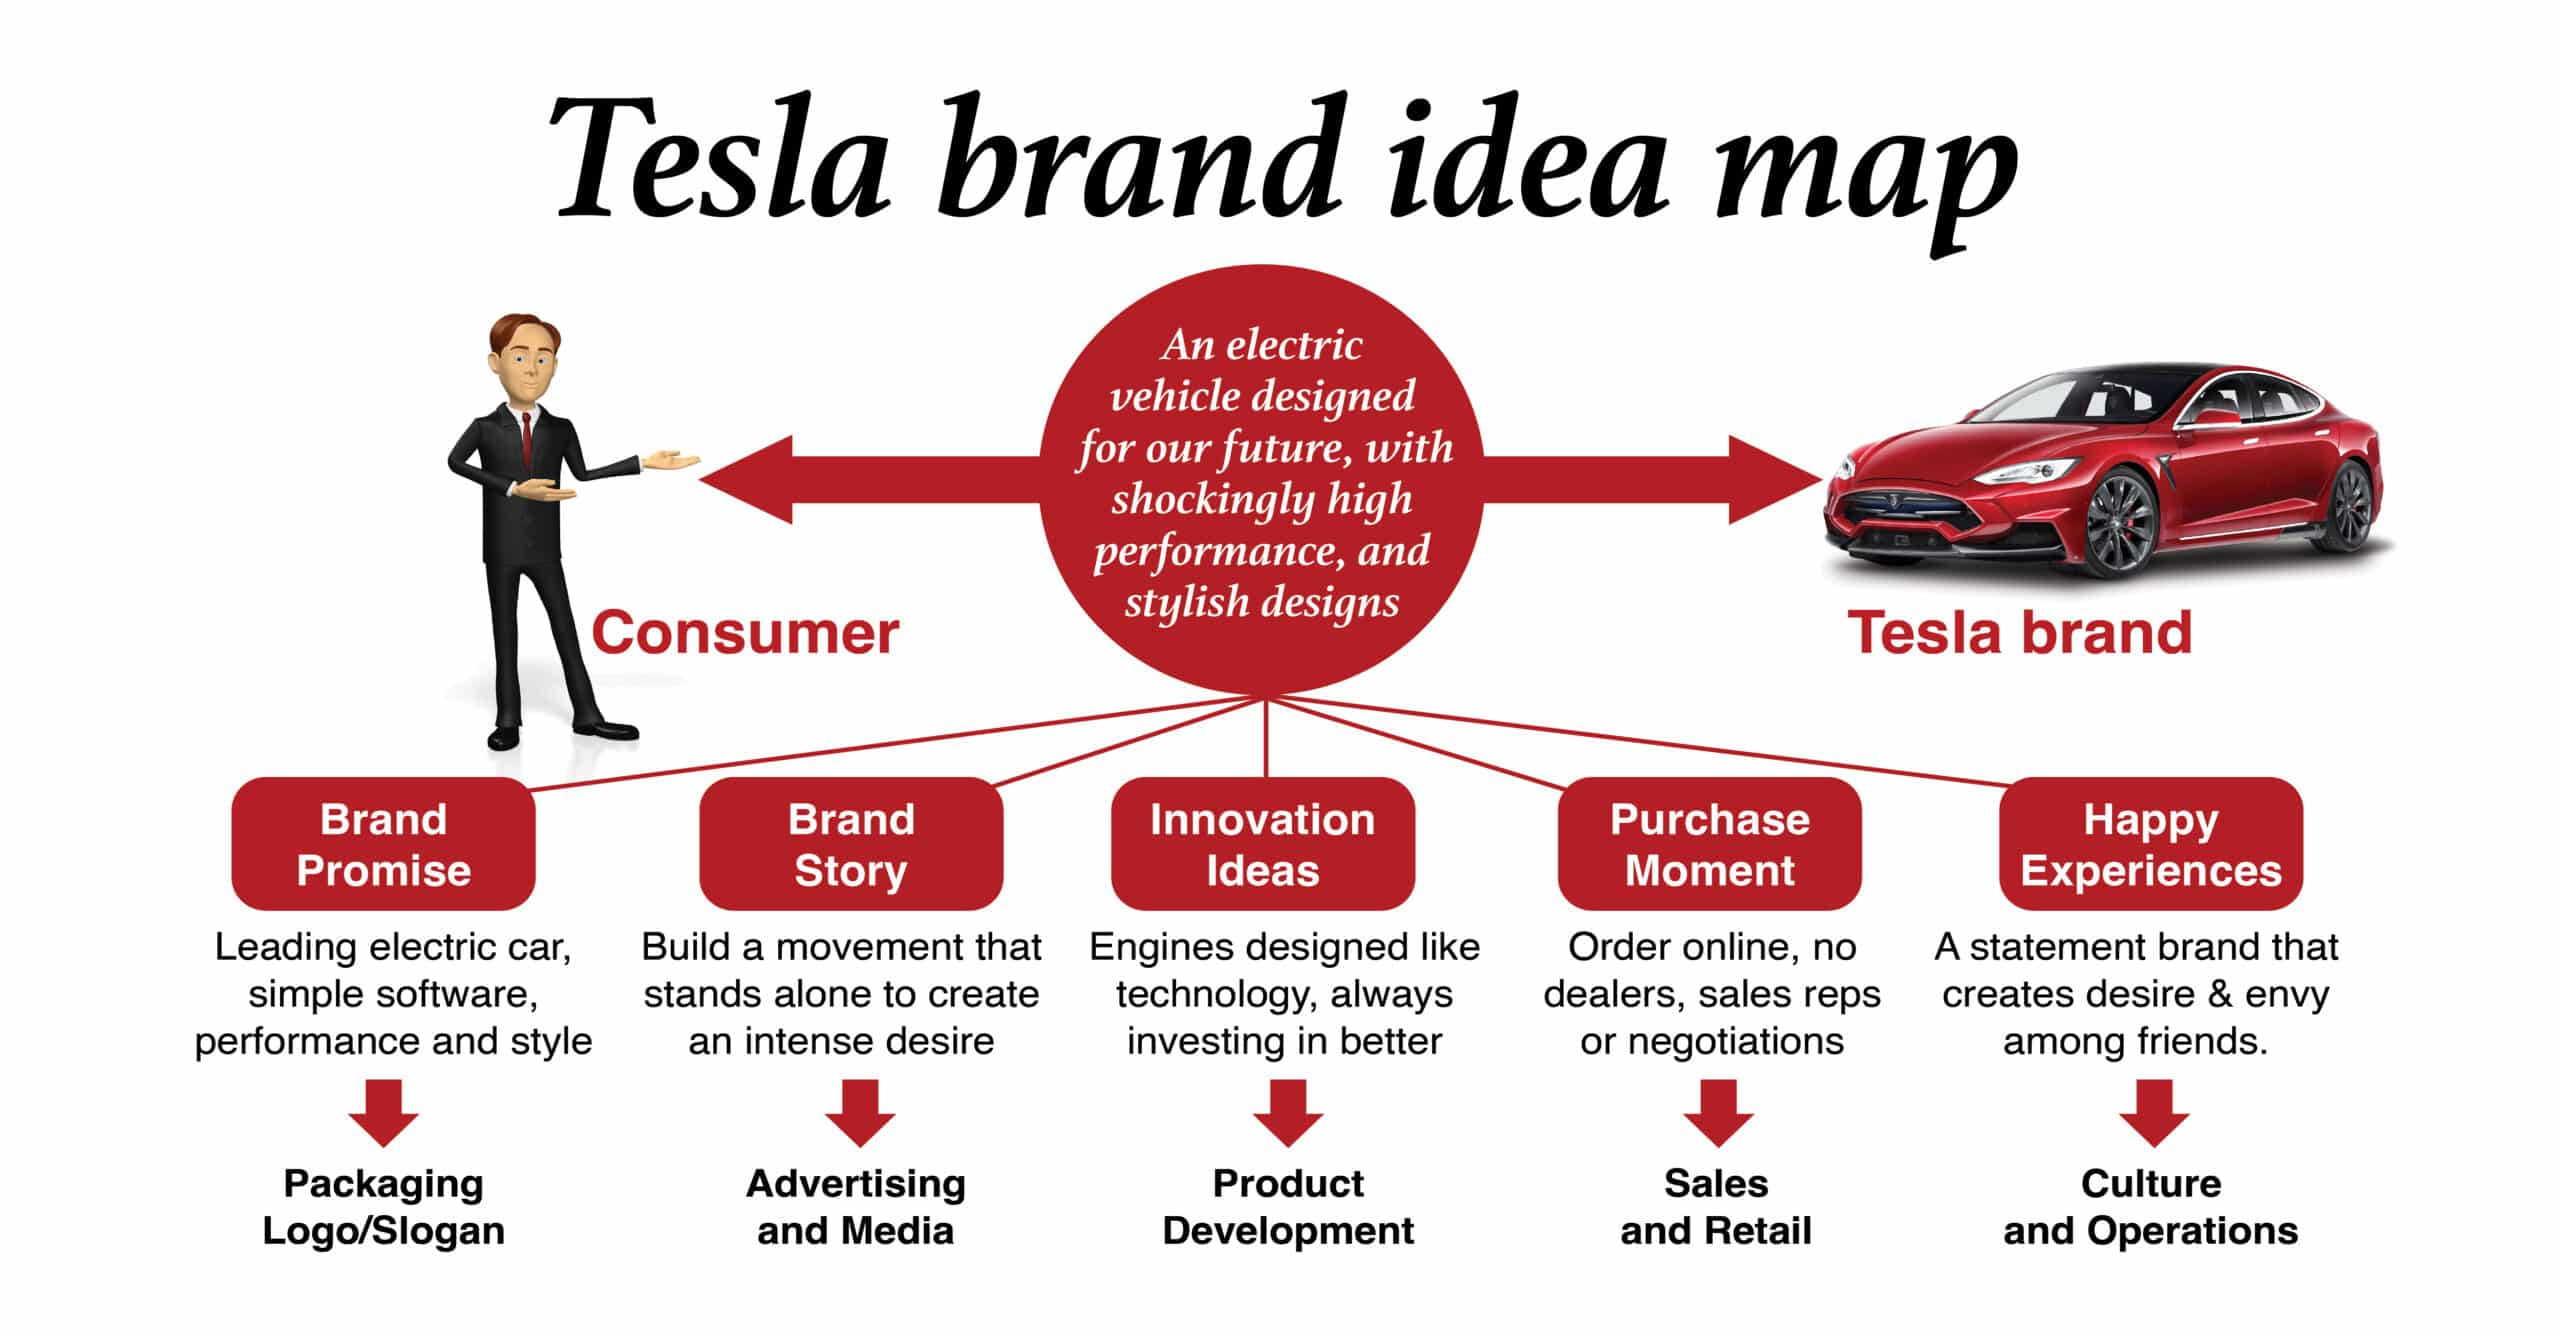 Tesla brand idea explaining how Elon Musk lines up the Tesla brand strategy